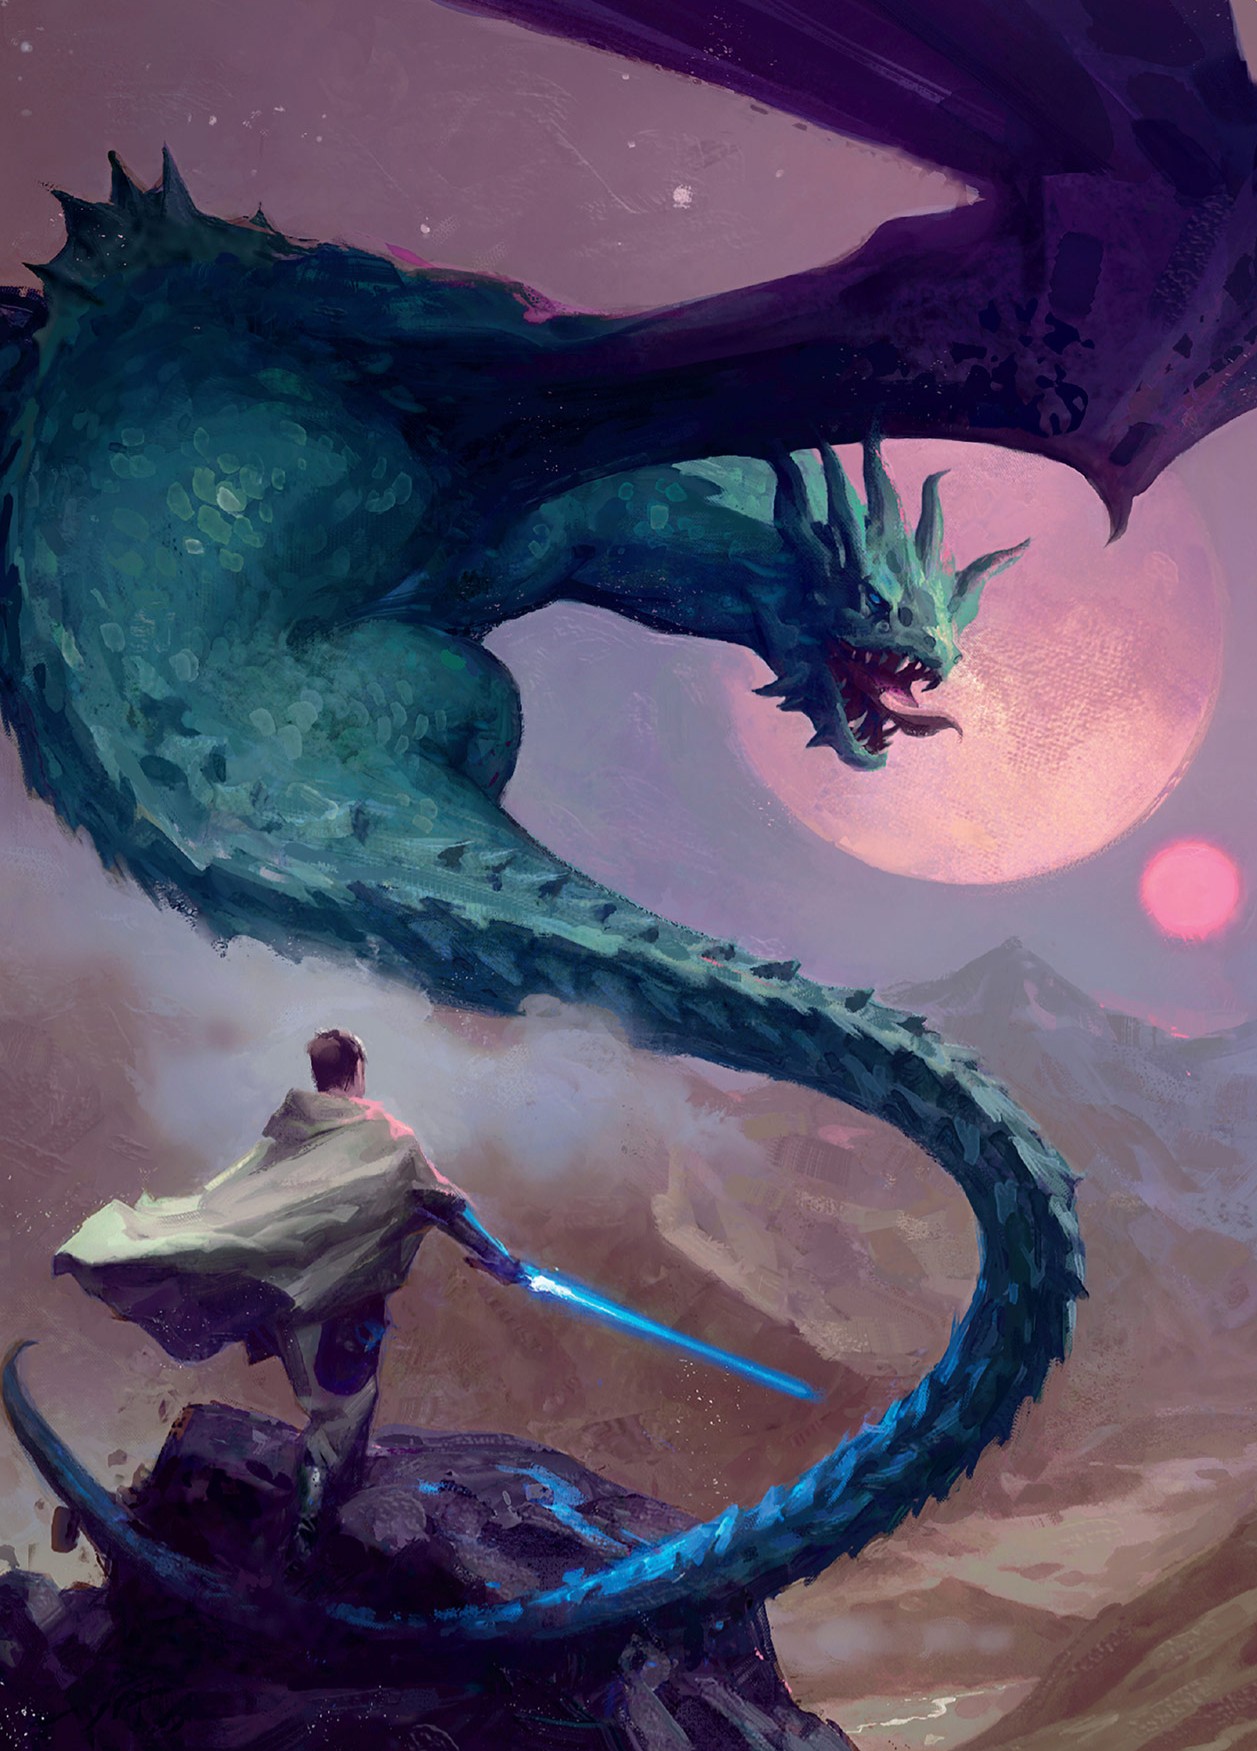 Plik:The Knight & the Dragon.jpg